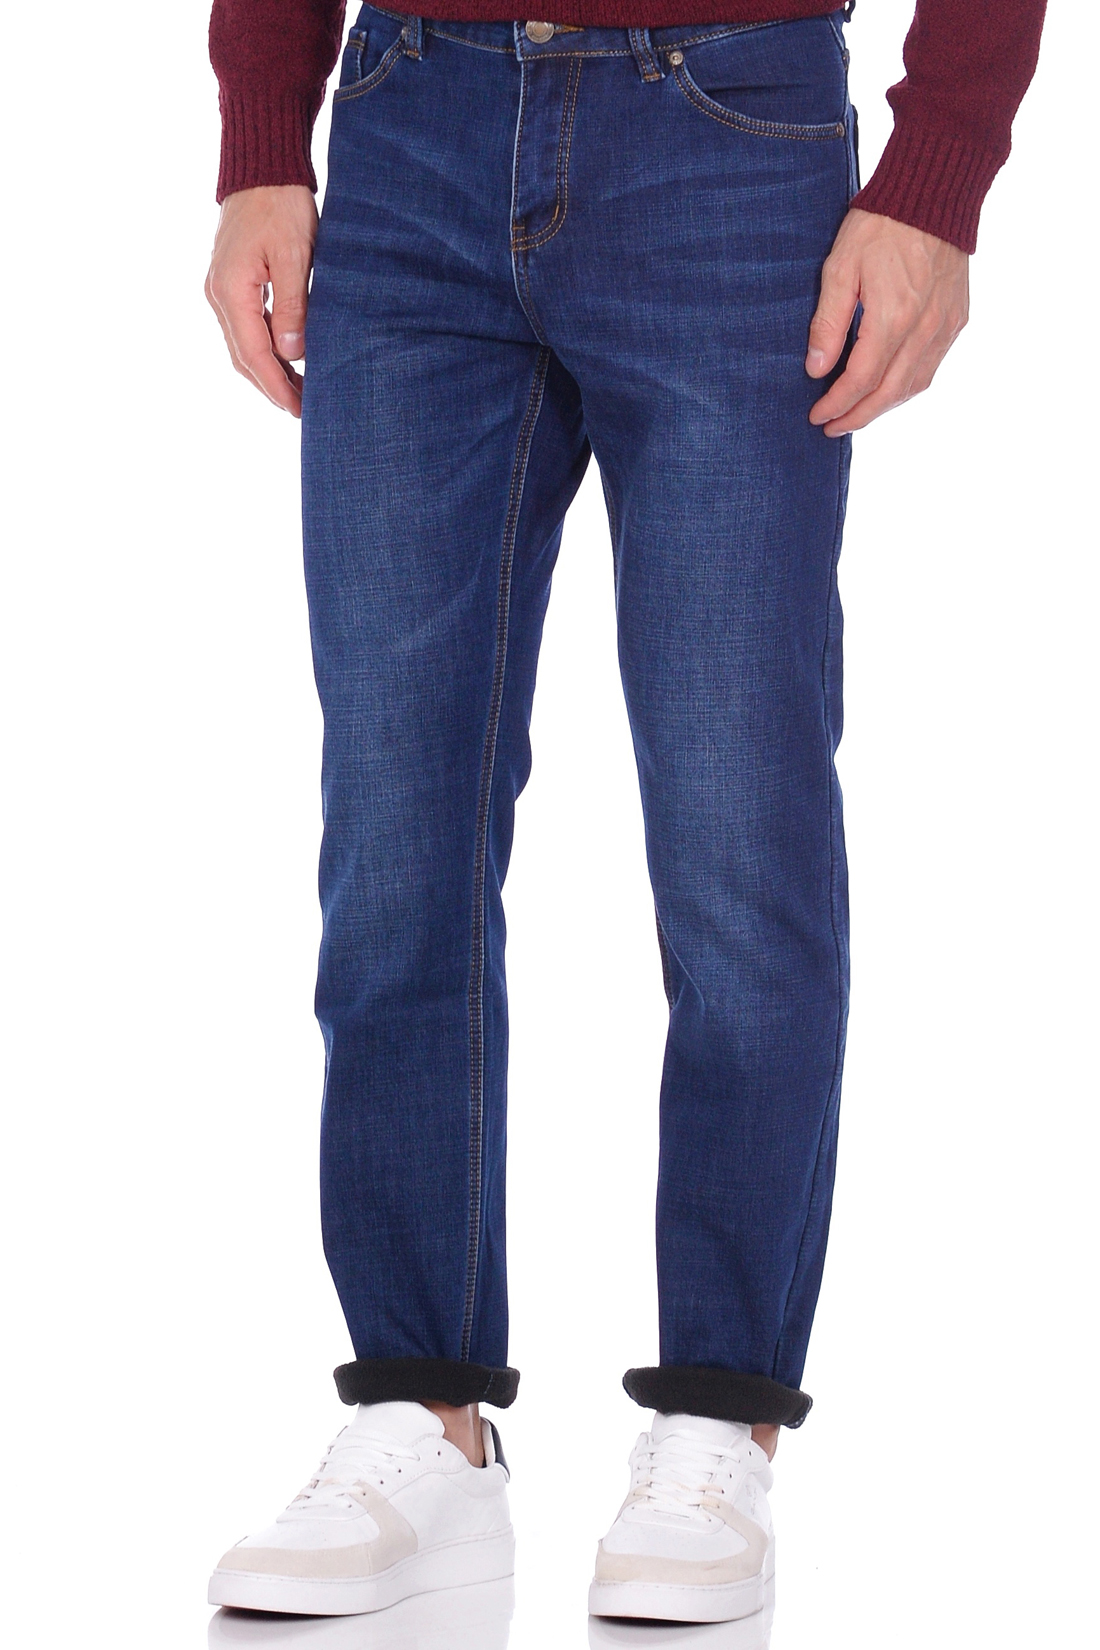 Утеплённые джинсы с заклёпками (арт. baon B809503), размер 30, цвет dark blue denim#синий